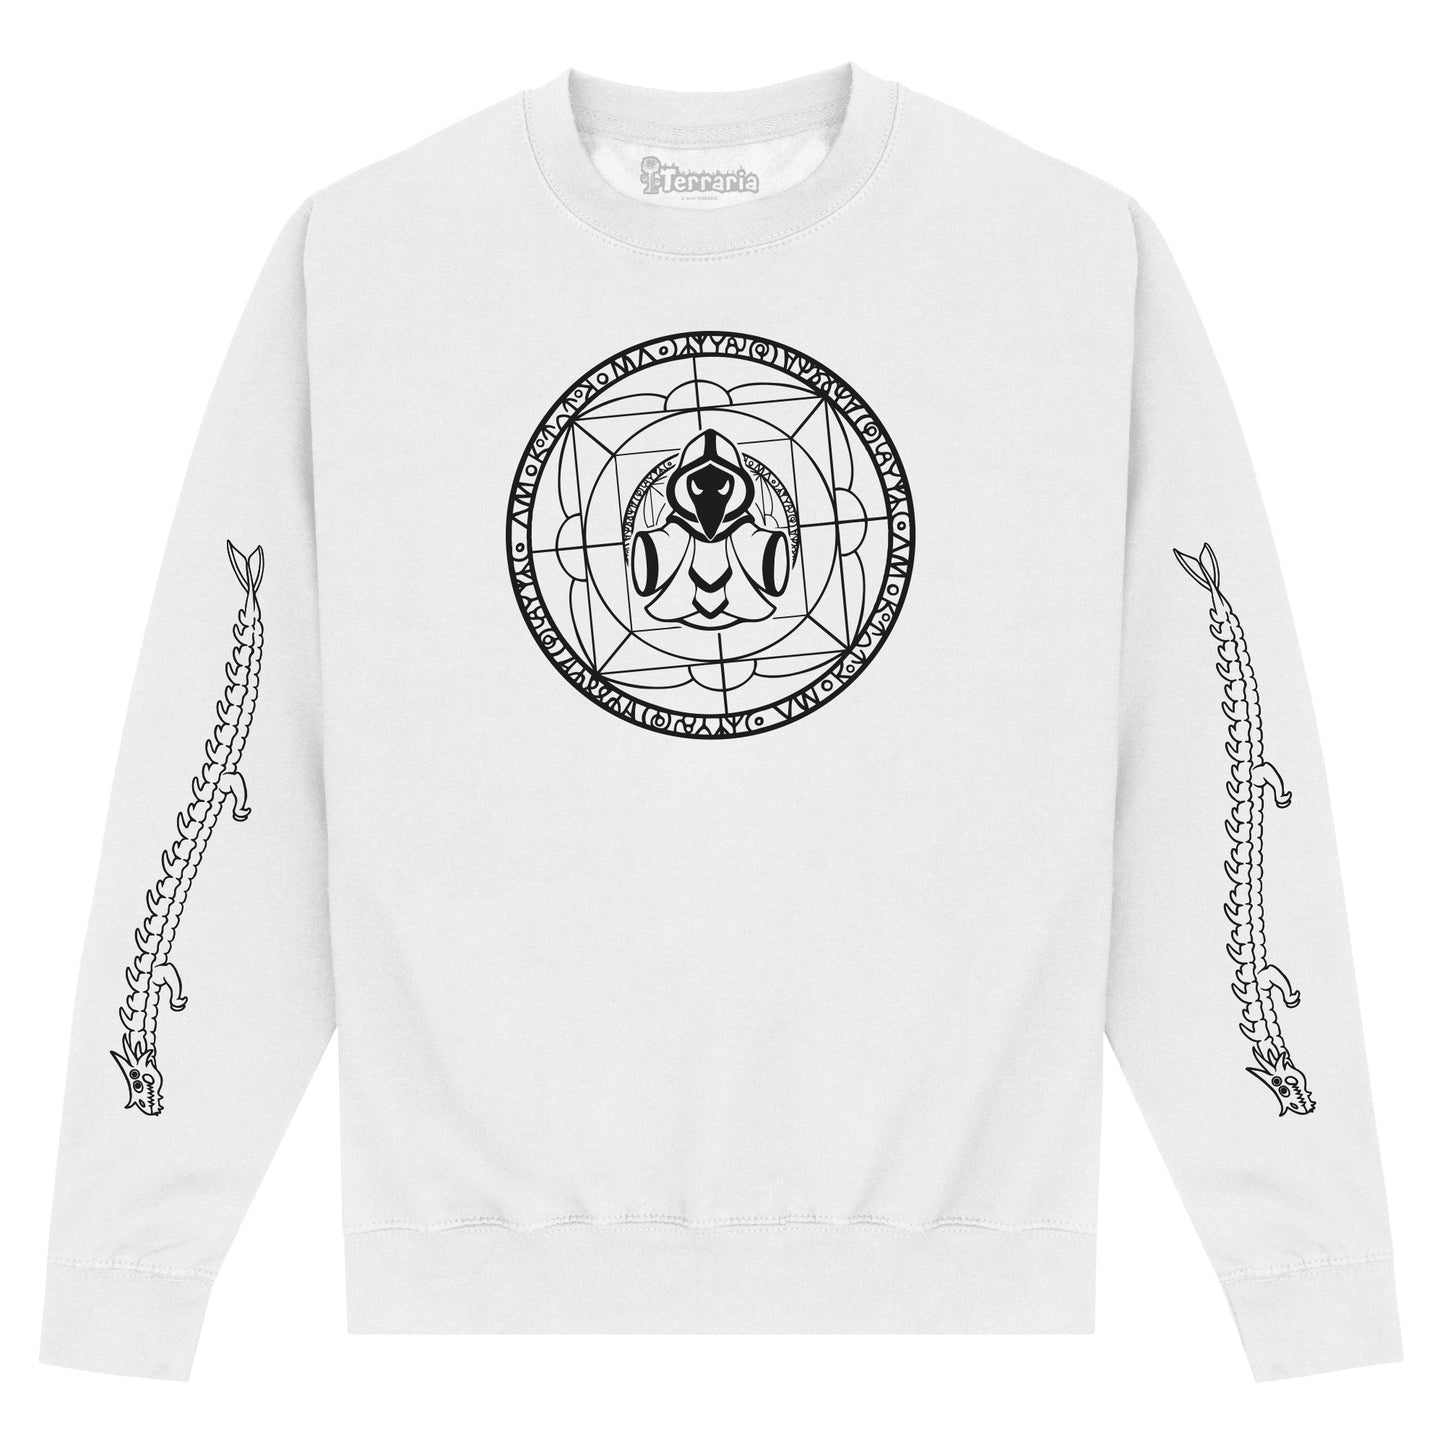 Terraria Emblem Sweatshirt - White